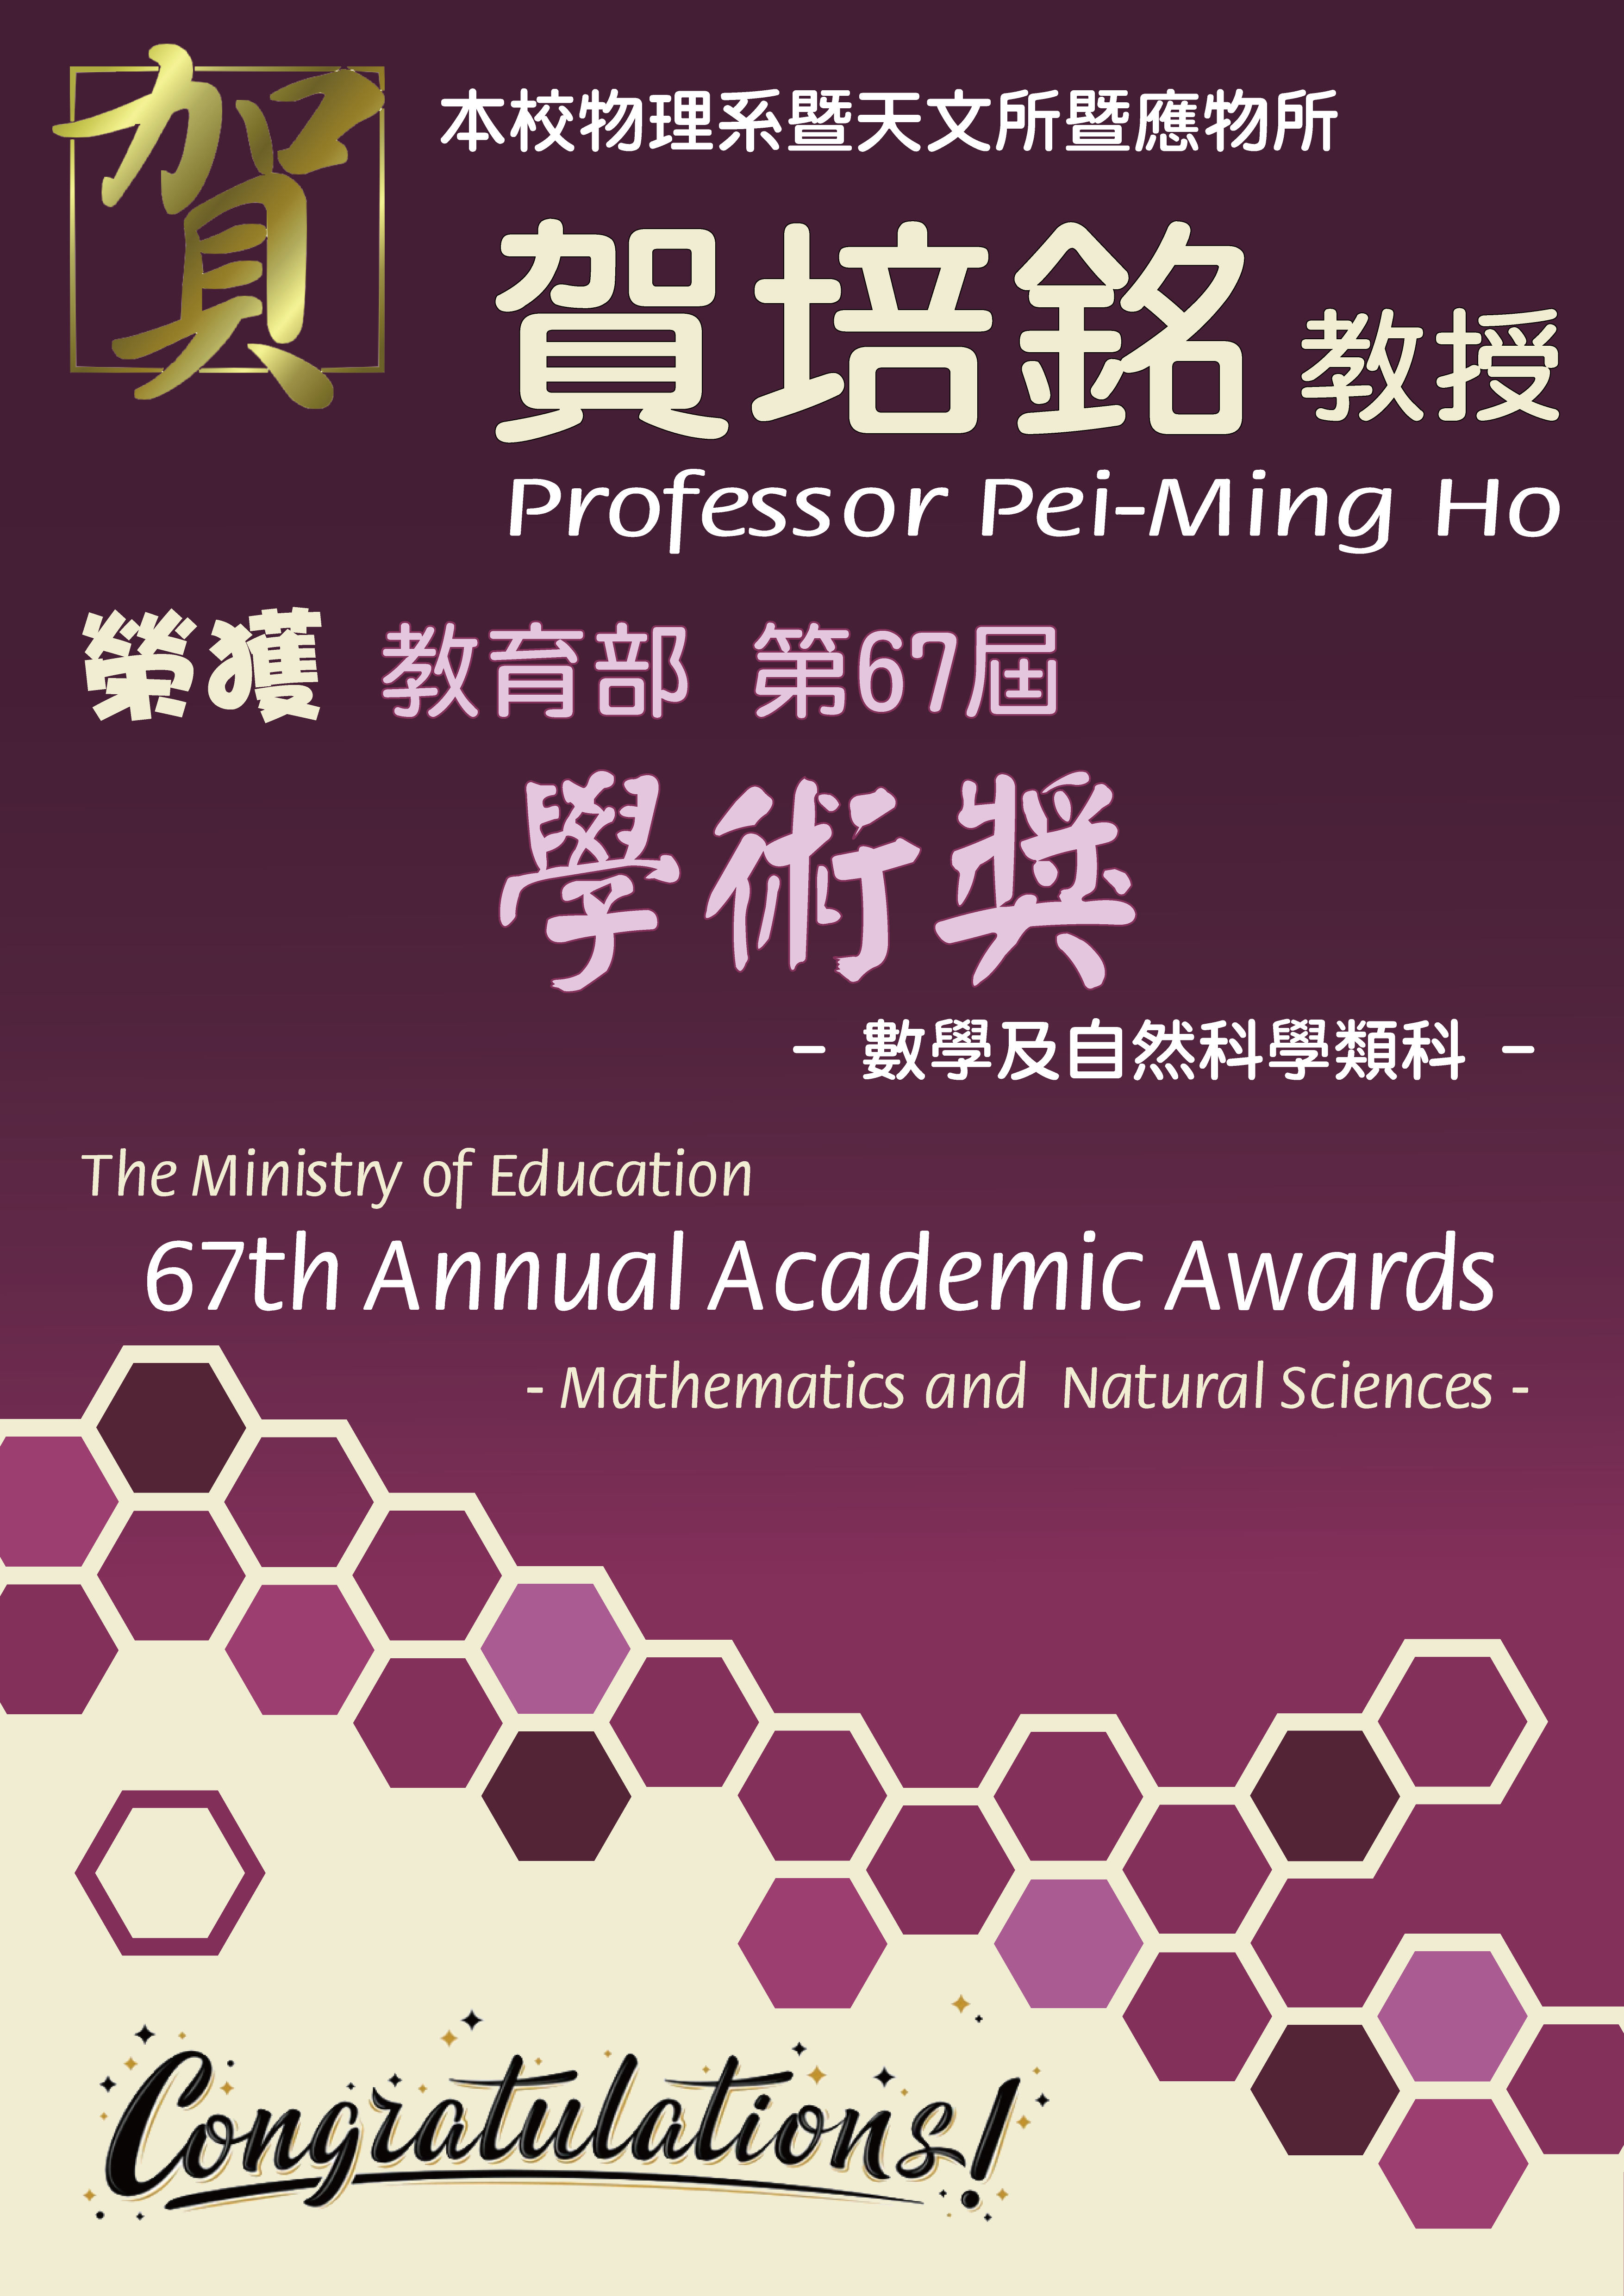 《賀》本系 賀培銘 教授 Prof. Pei-Ming Ho 榮獲 教育部 第67屆《學術獎》- 數學及自然科學類科 (The Ministry of Education's 67th Annual Academic Awards - Mathematics and Natural Sciences)